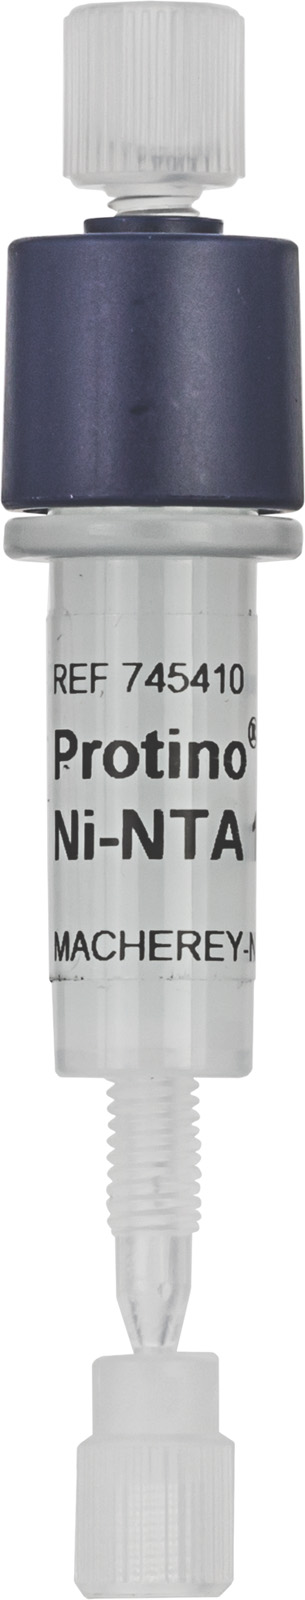 Oczyszczanie His-tag białek Kolumny FPLC™ Protino Ni-NTA Columns 1 mL